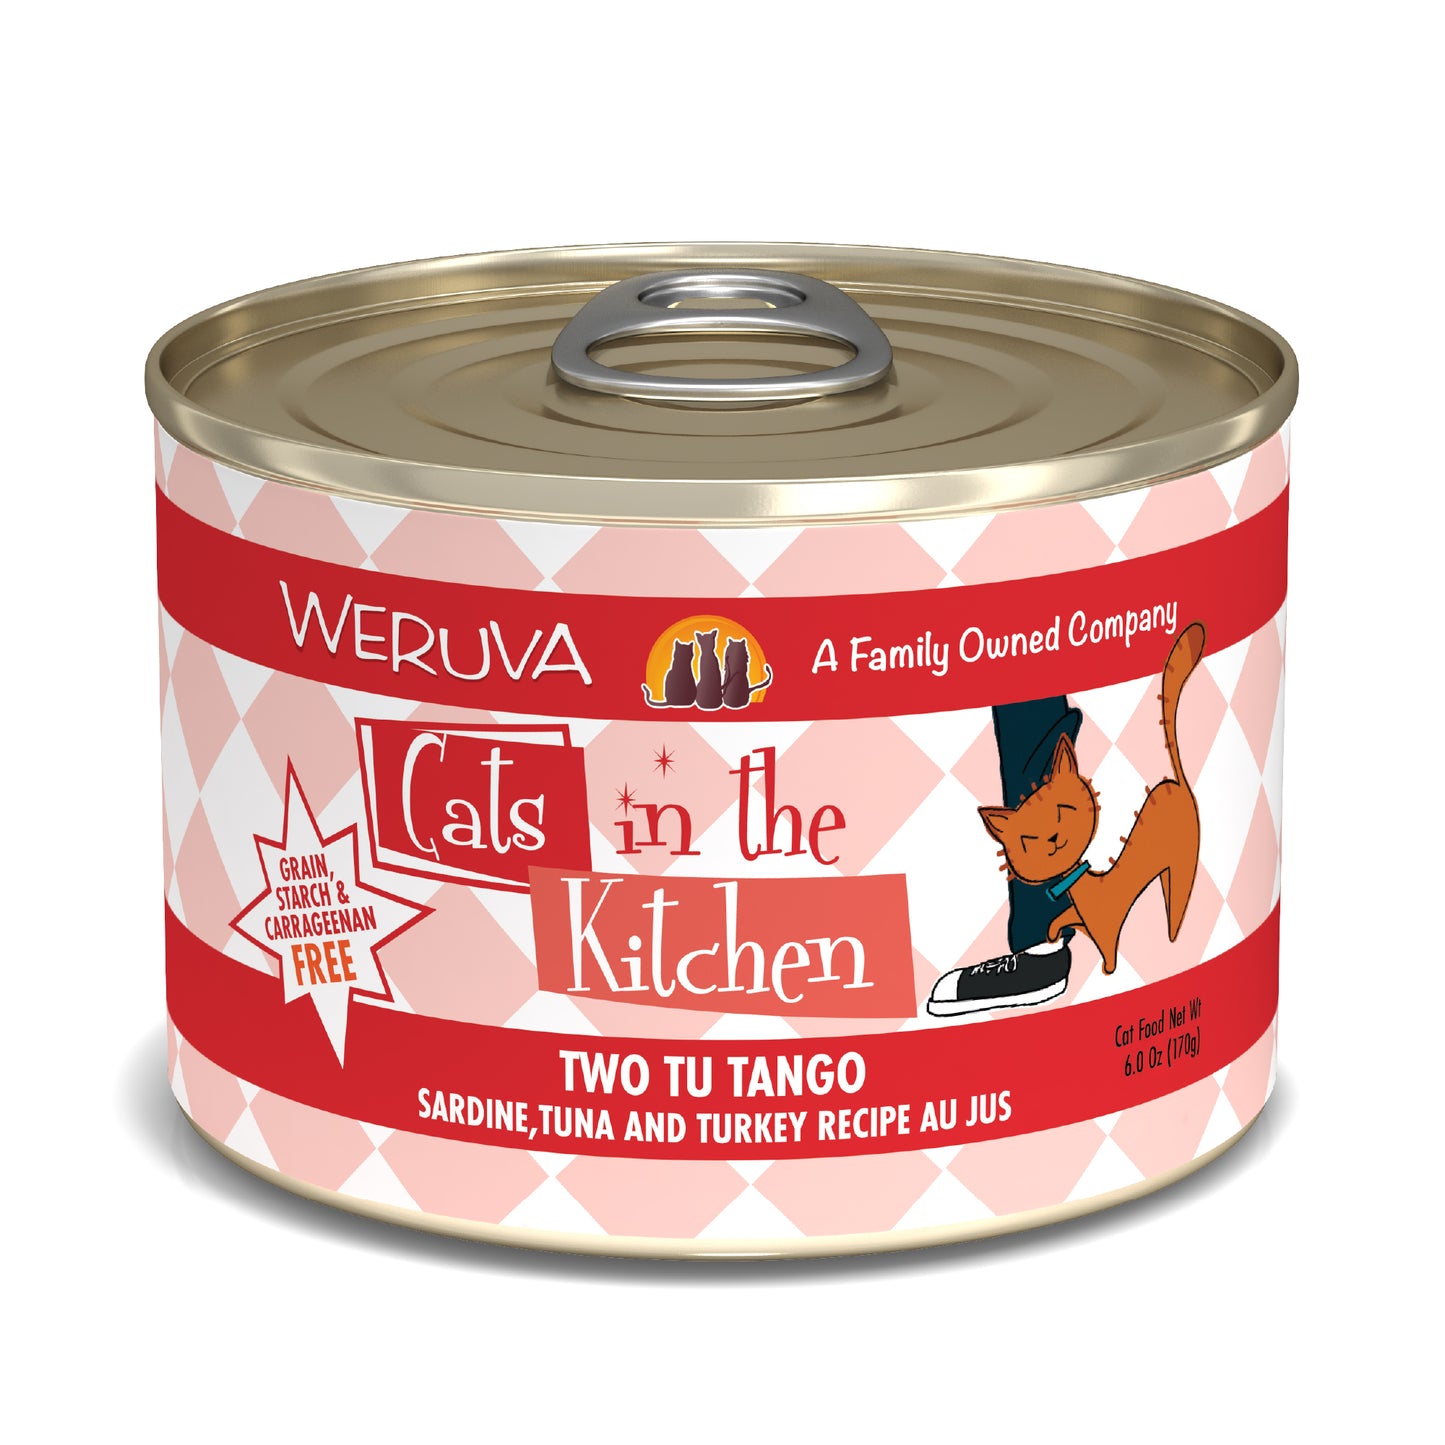 Weruva Cats in the Kitchen 6oz Canned Cat Food Two Tu Tango Sardine, Tuna and Turkey